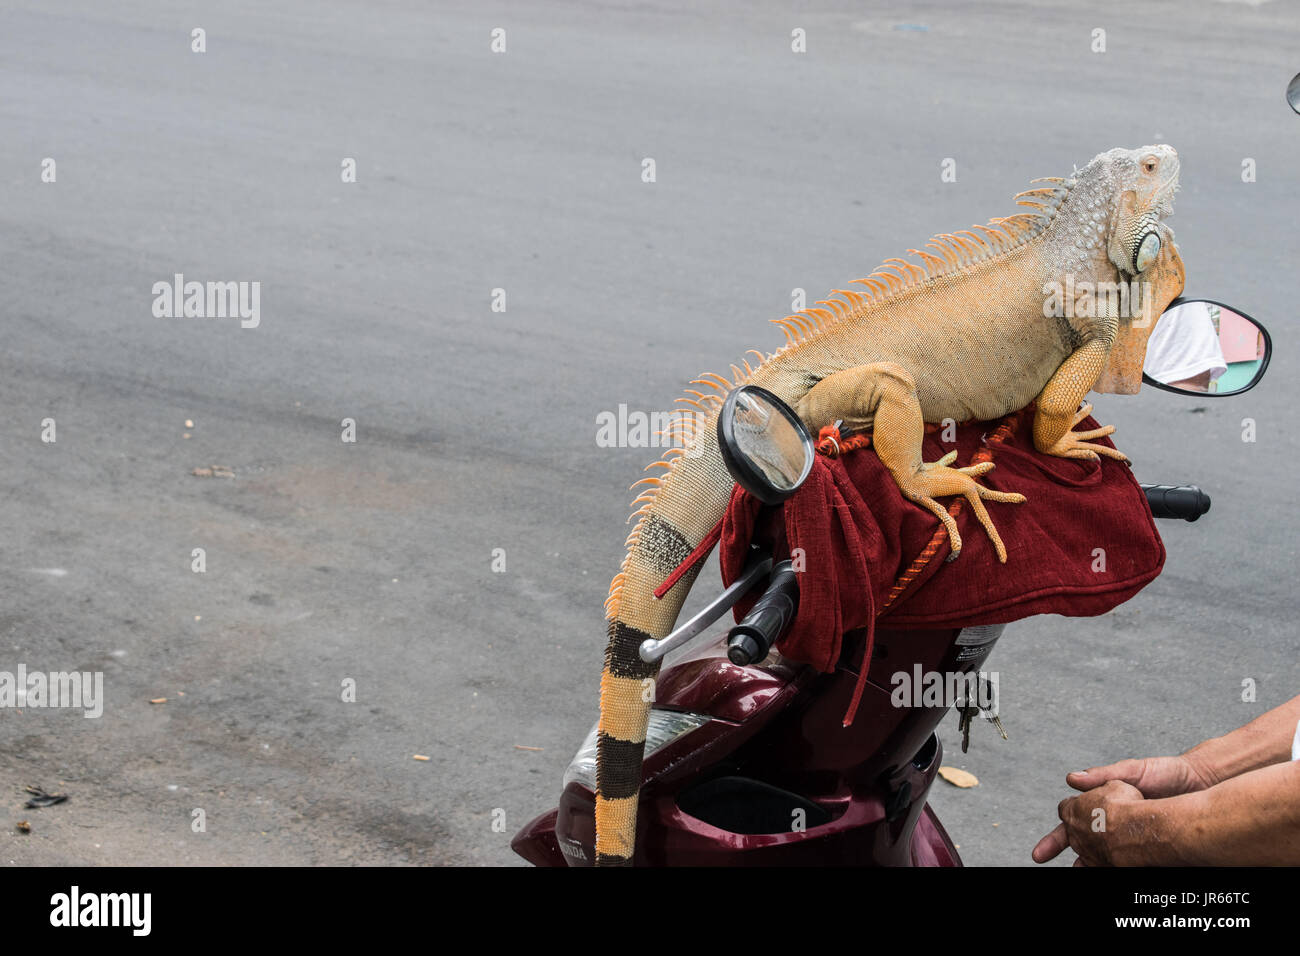 Iguana on a motorbike Stock Photo